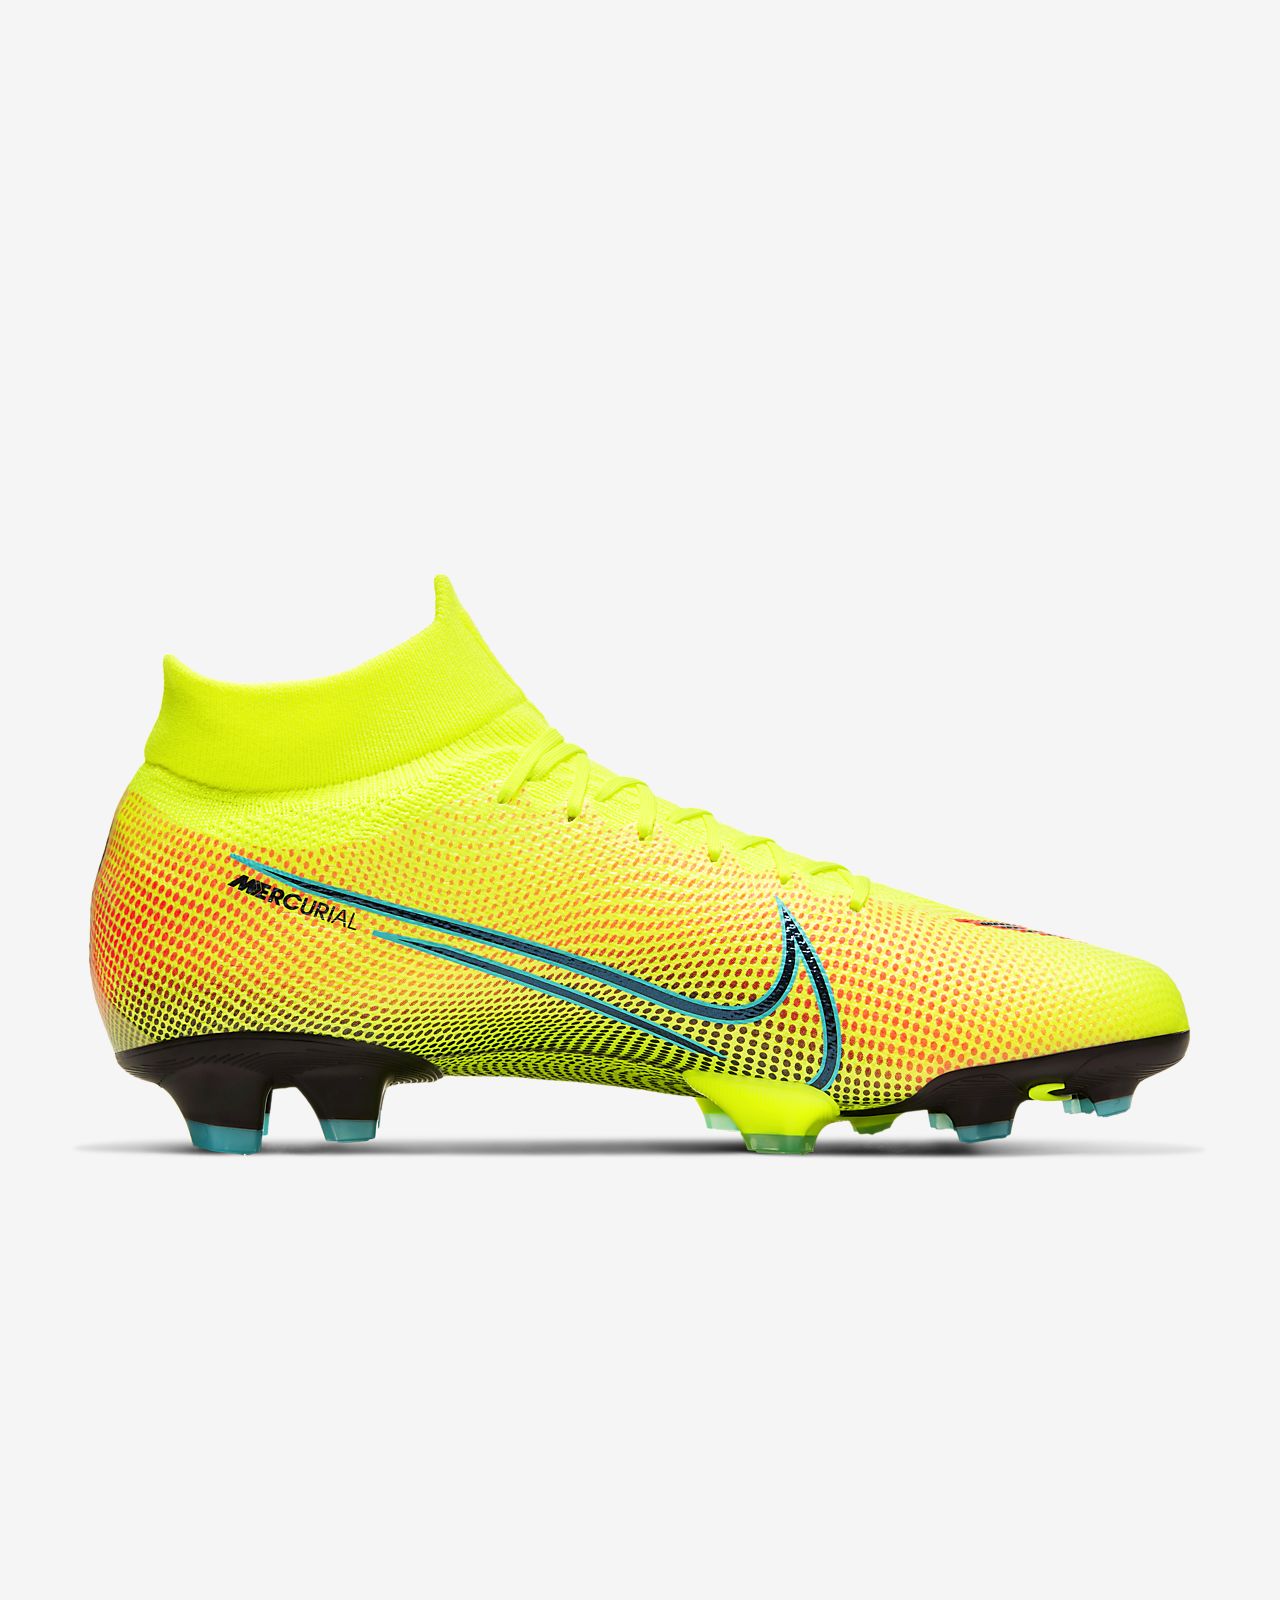 Nike Superfly 6 Pro FG Mens Football Boots AH7368 Soccer.